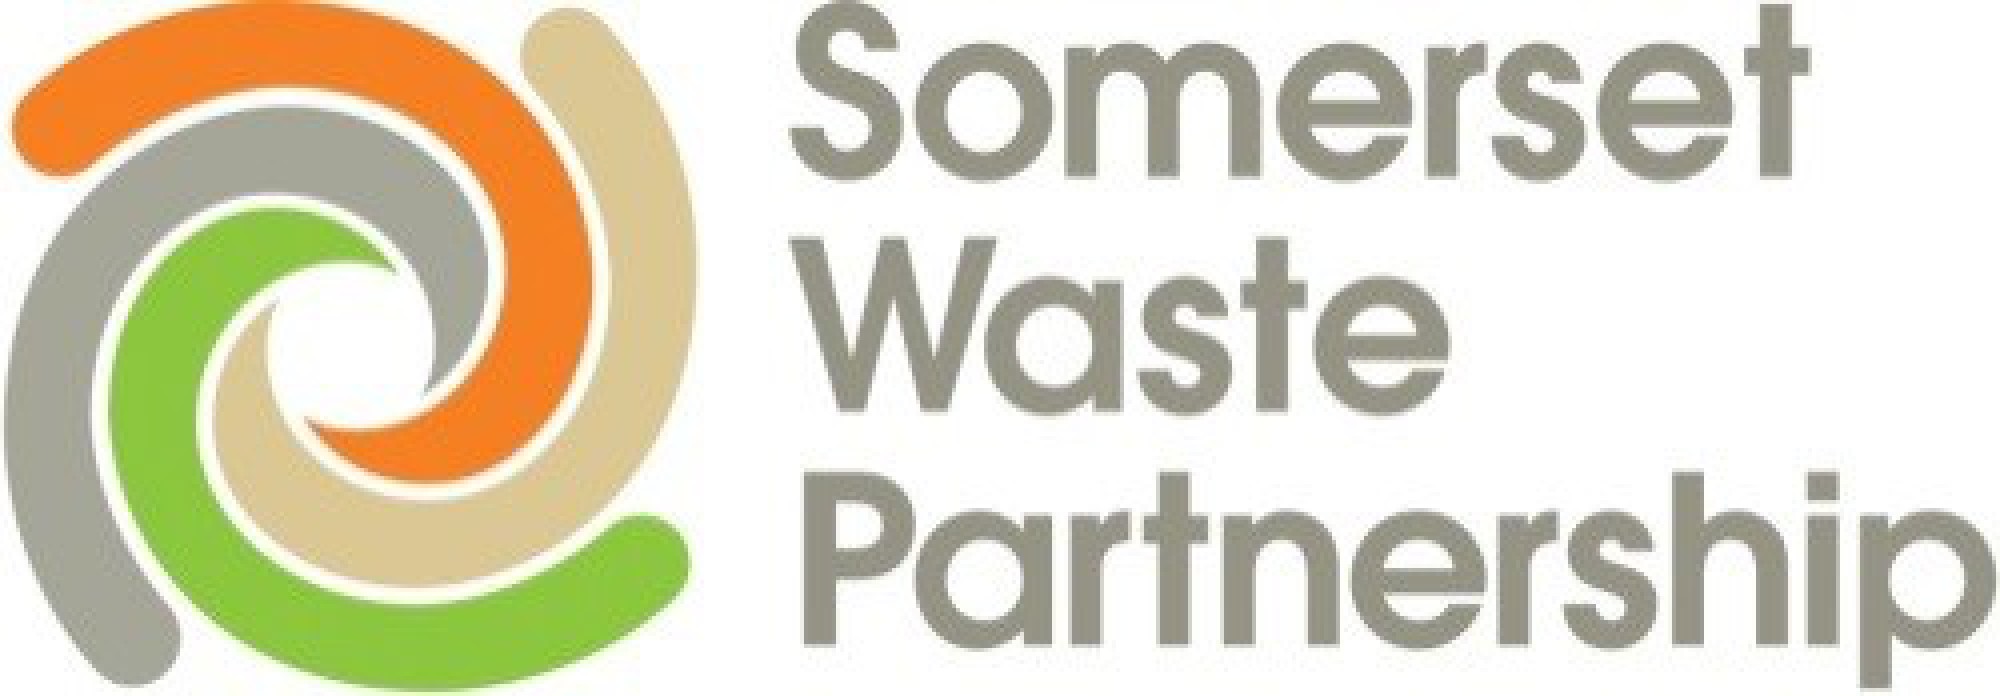 Somerset Waste Partnership service update